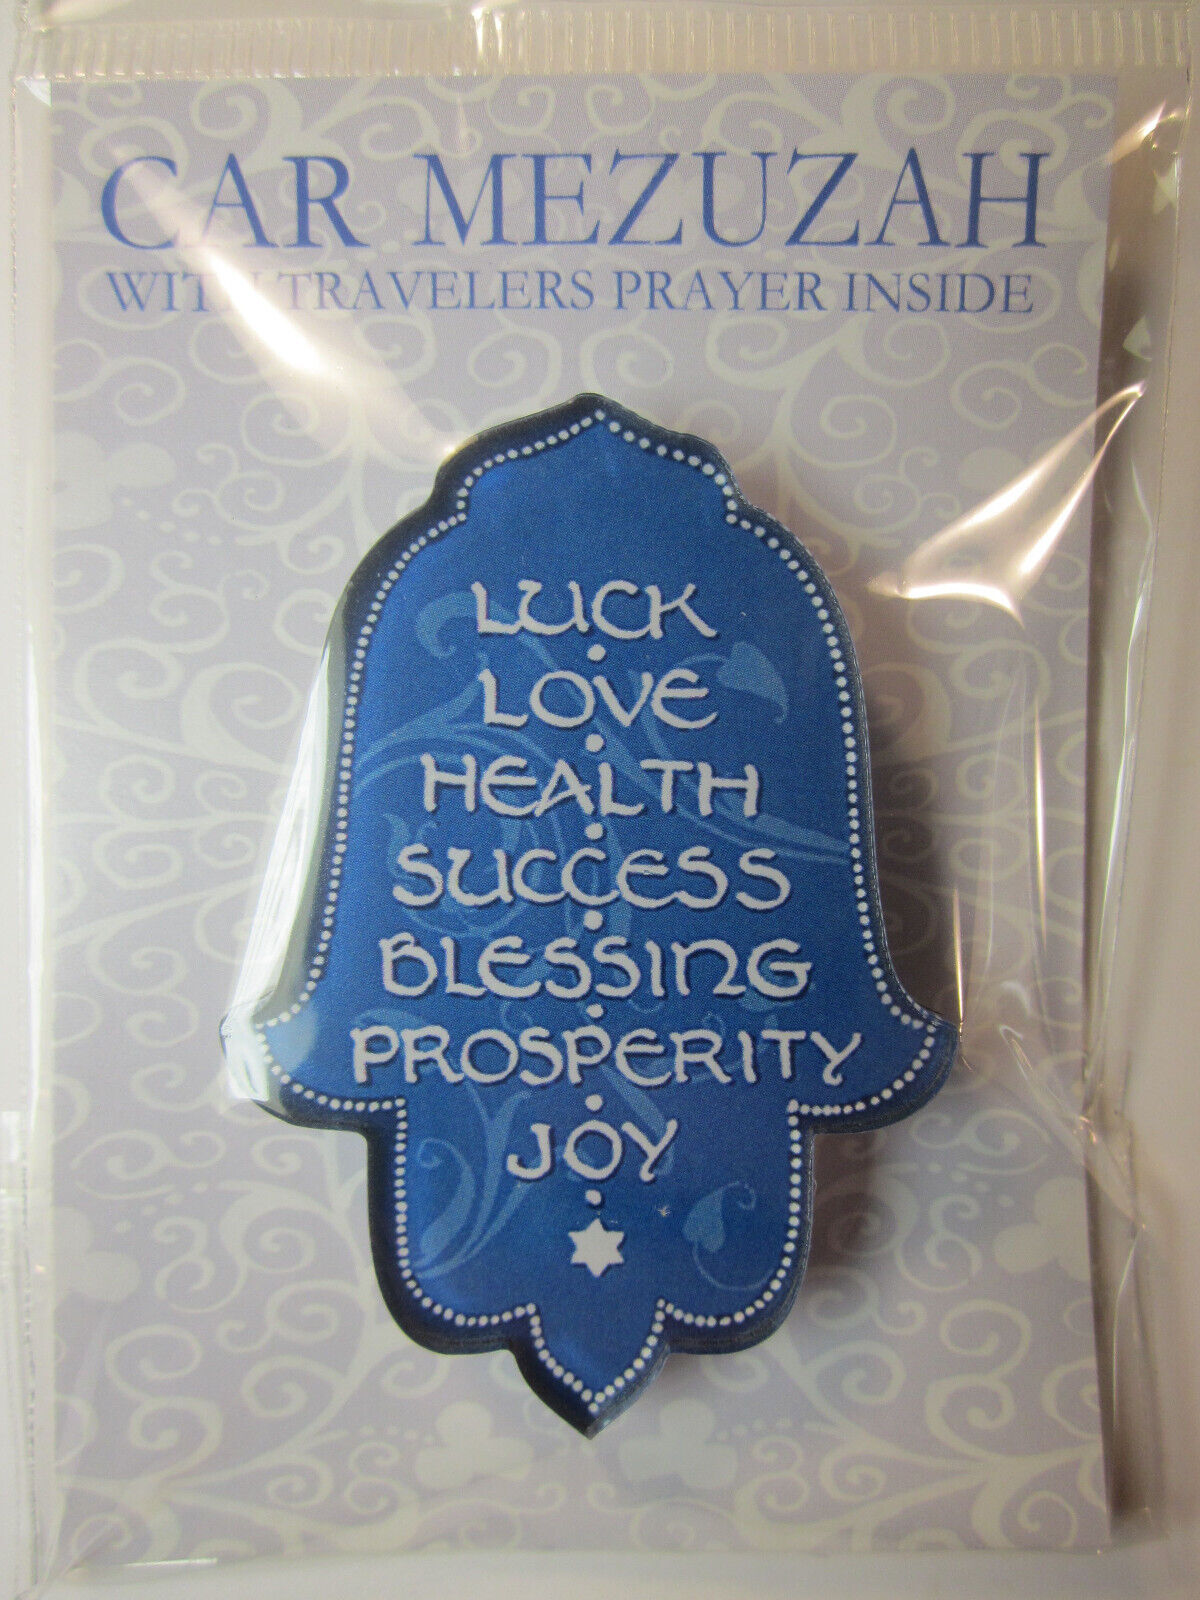 Car Mezuzah Acrylic BLUE HAMSA SEVEN BLESSINGS with Travelers Prayer